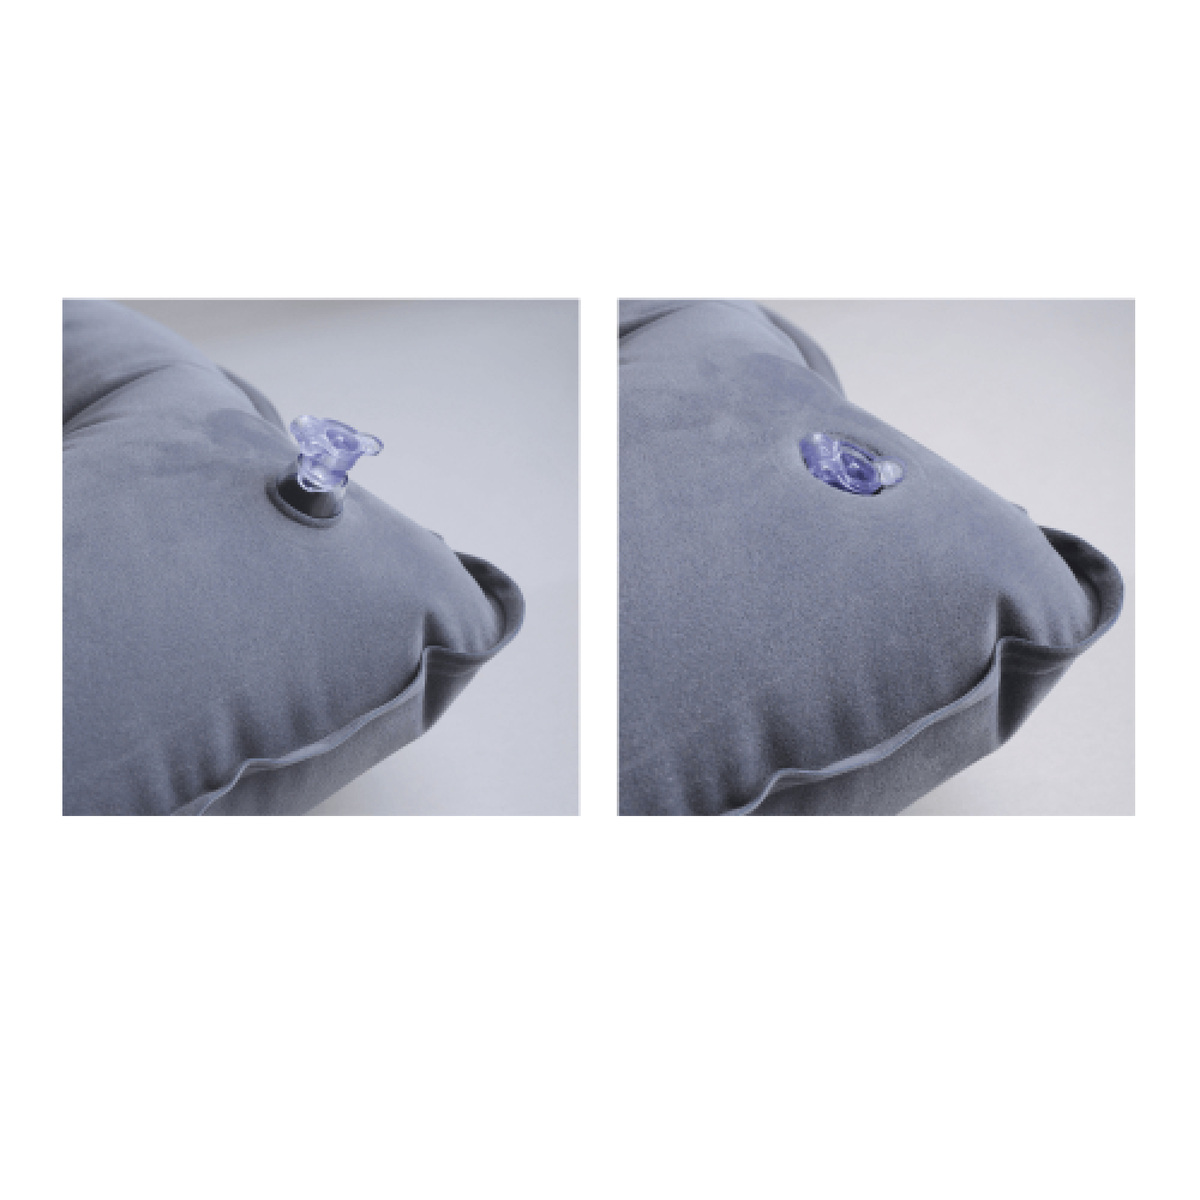 Travel Blue Inflatable Neck Pillow, Blue, 220